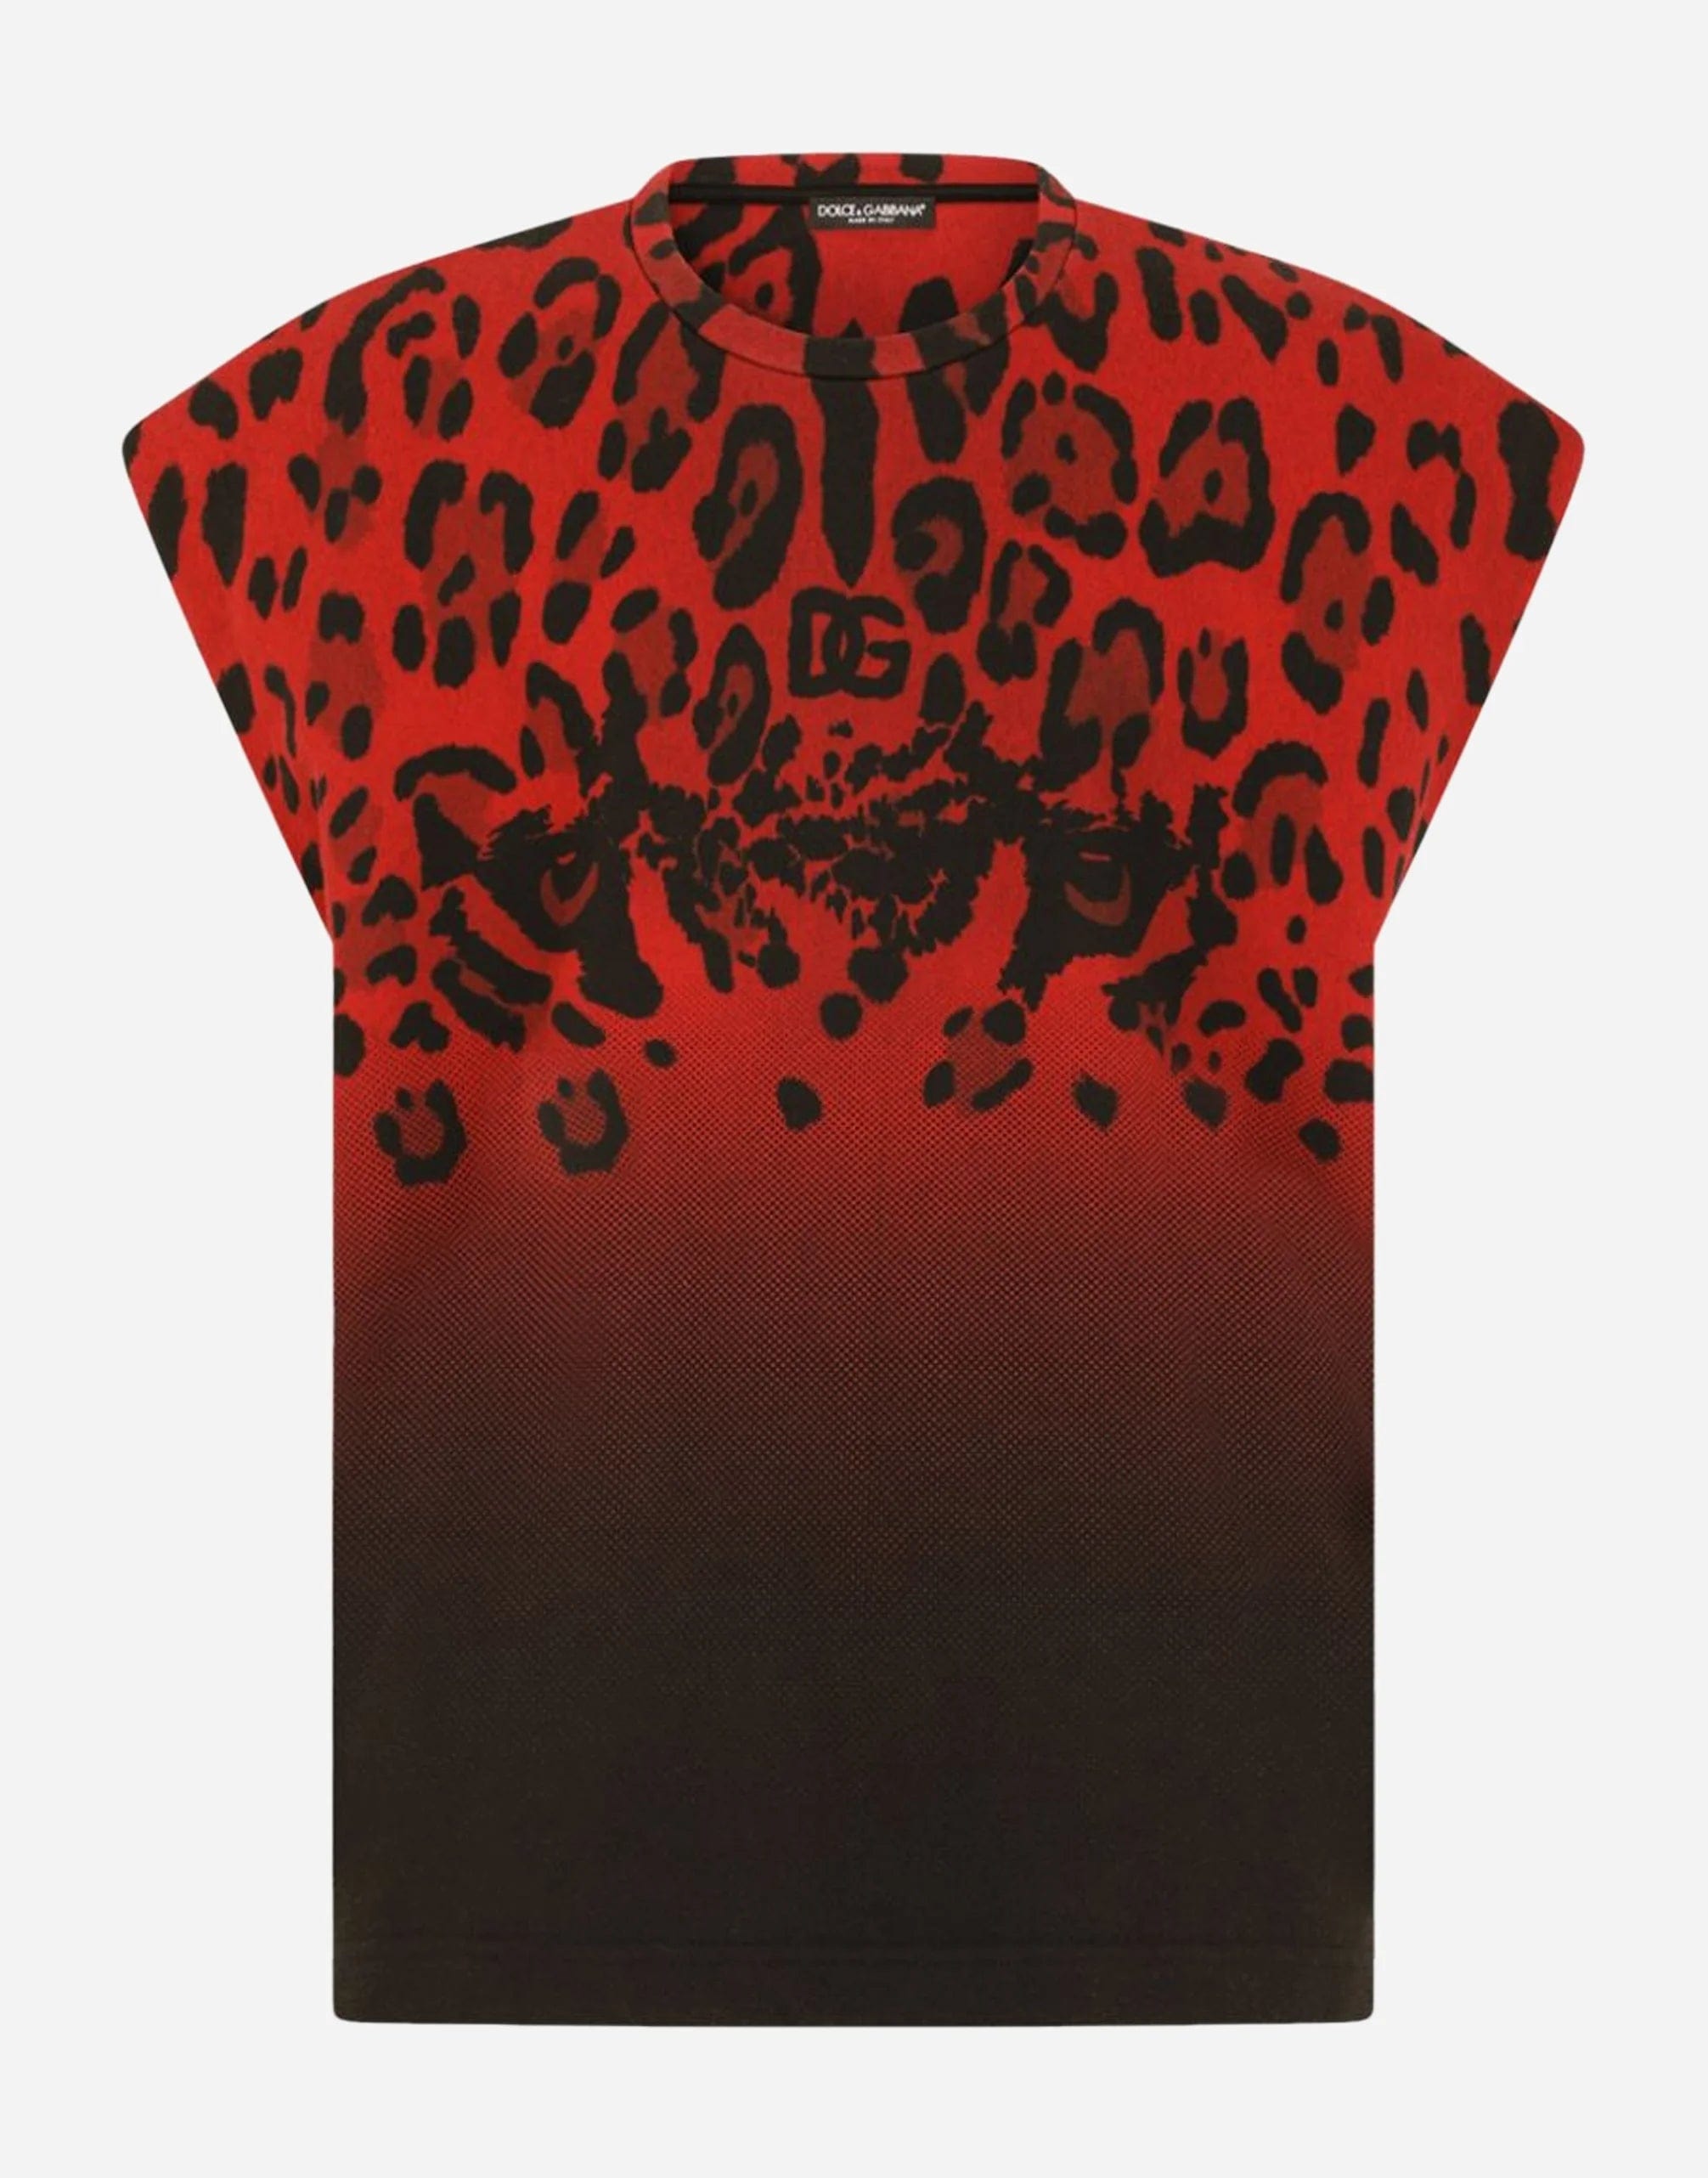 Dolce & Gabbana Leopard Print Tank Top